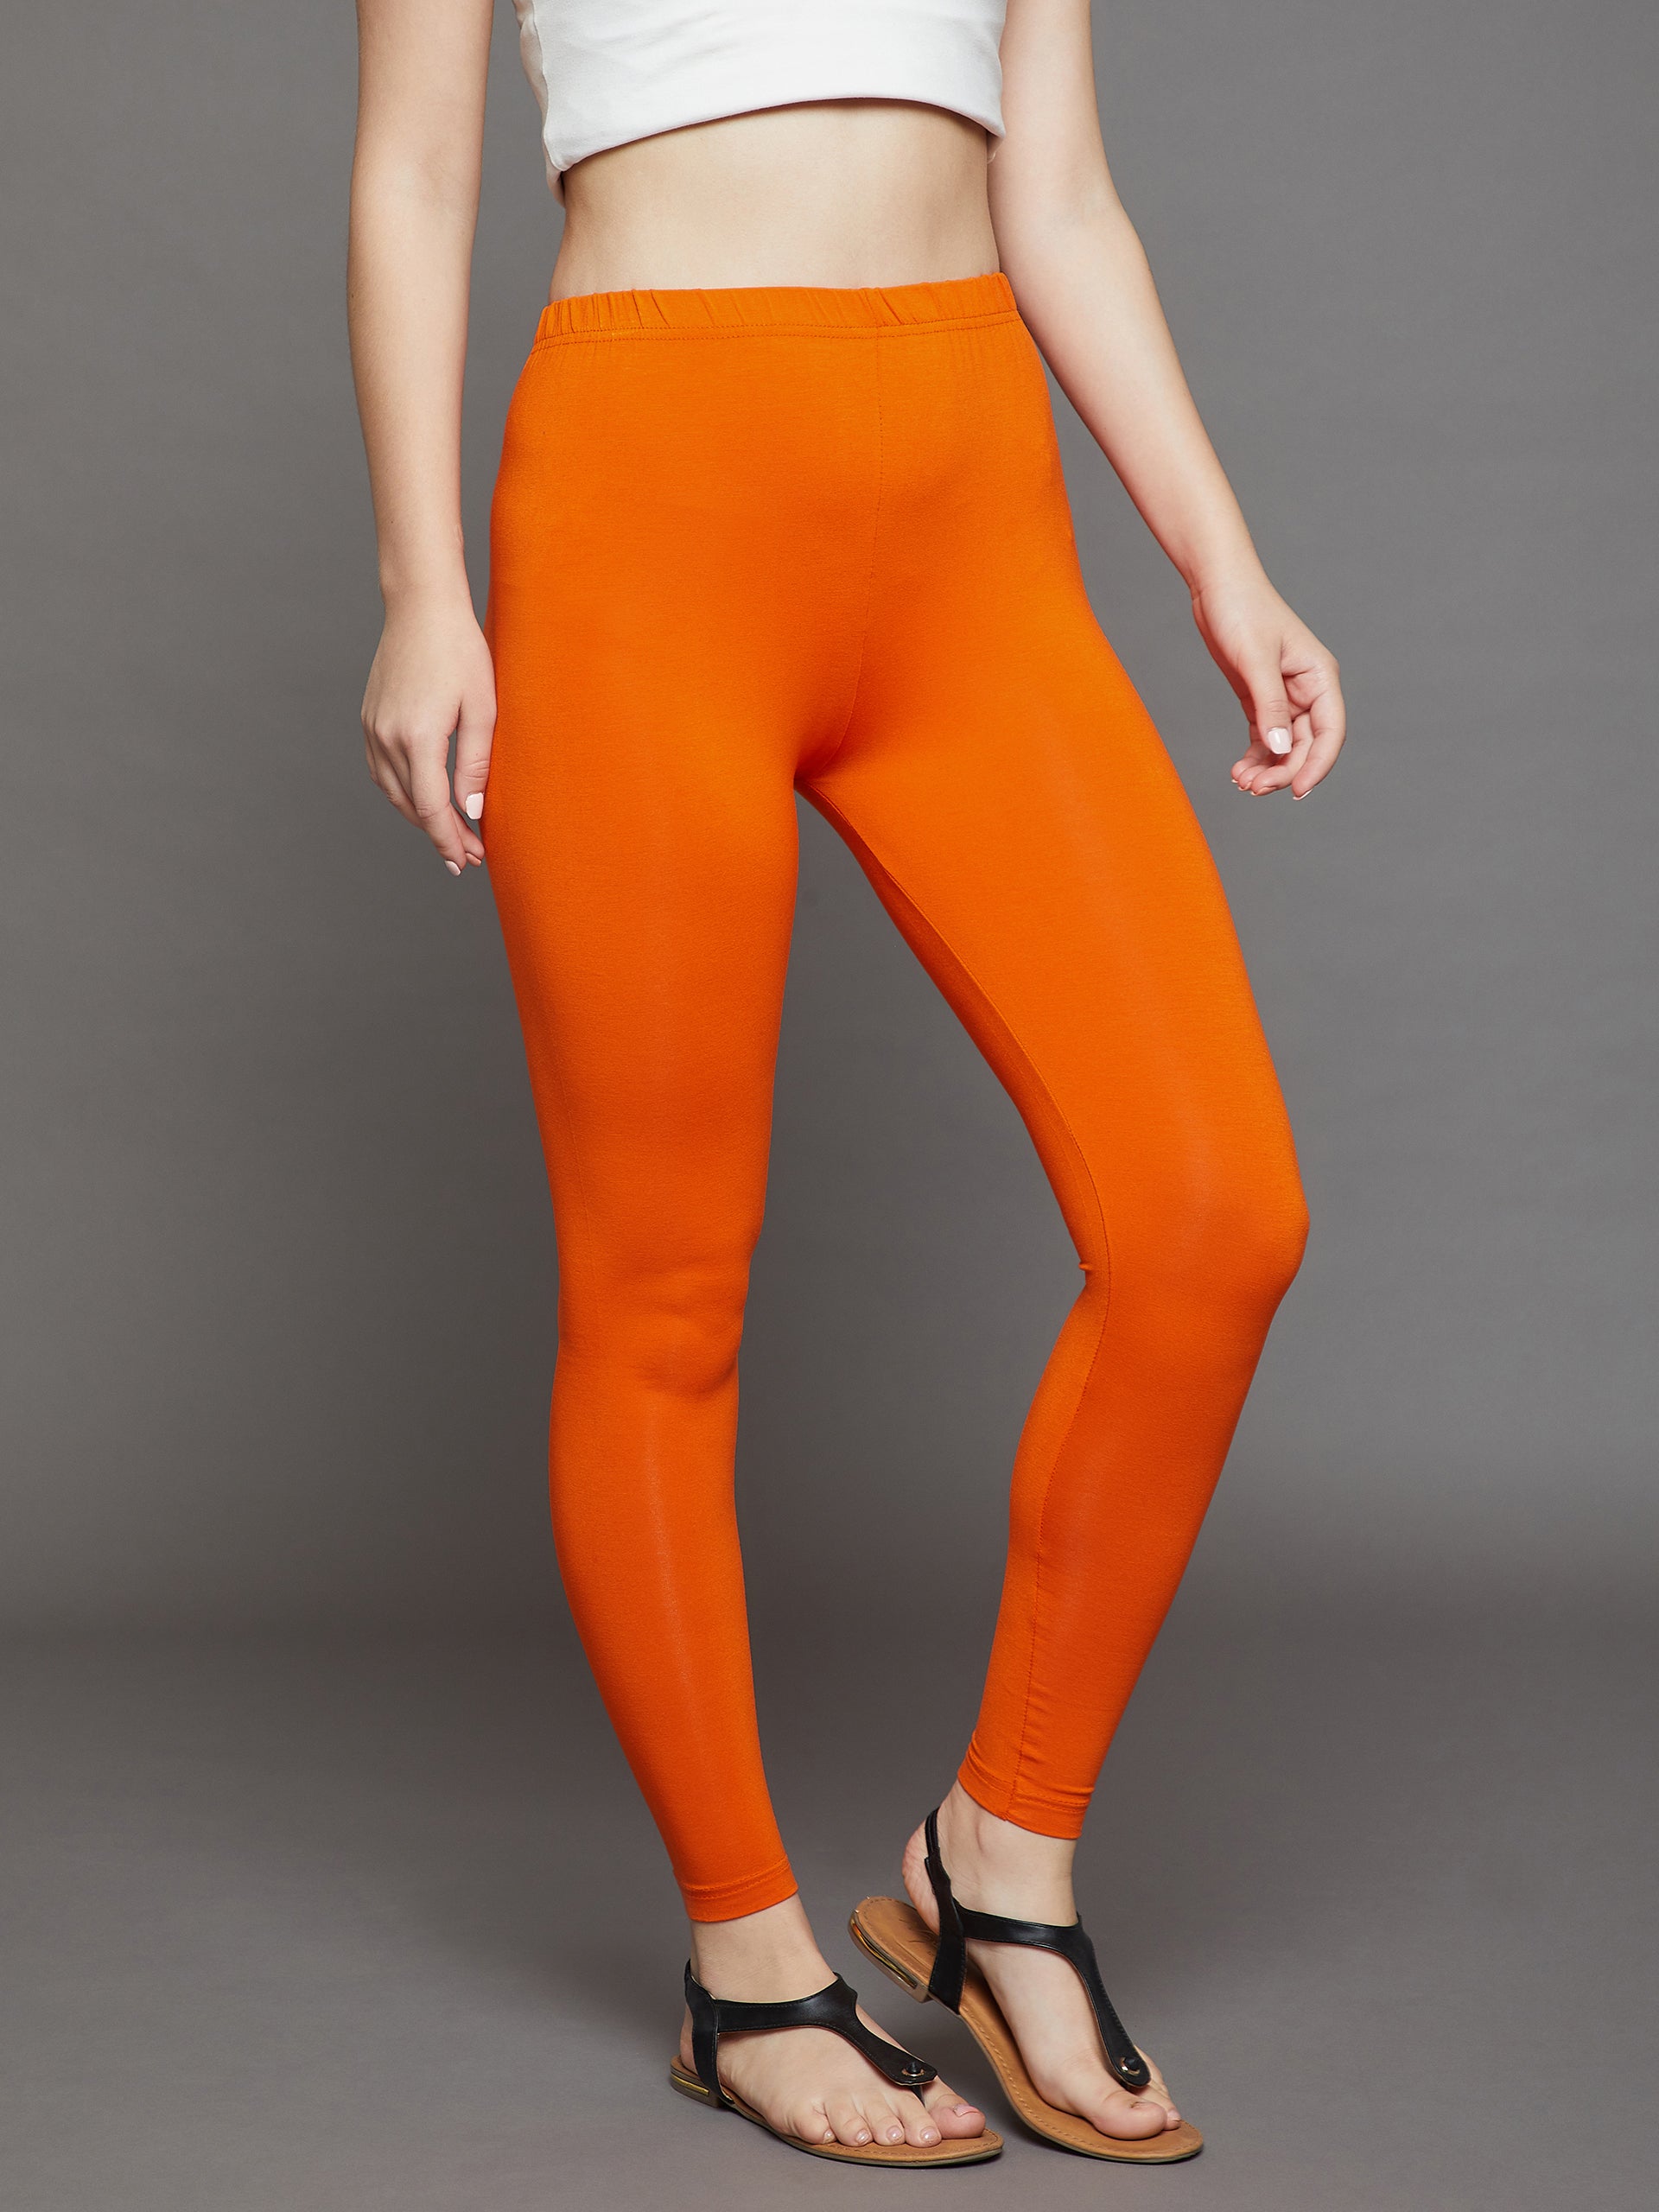 Fascinating orange color leggings